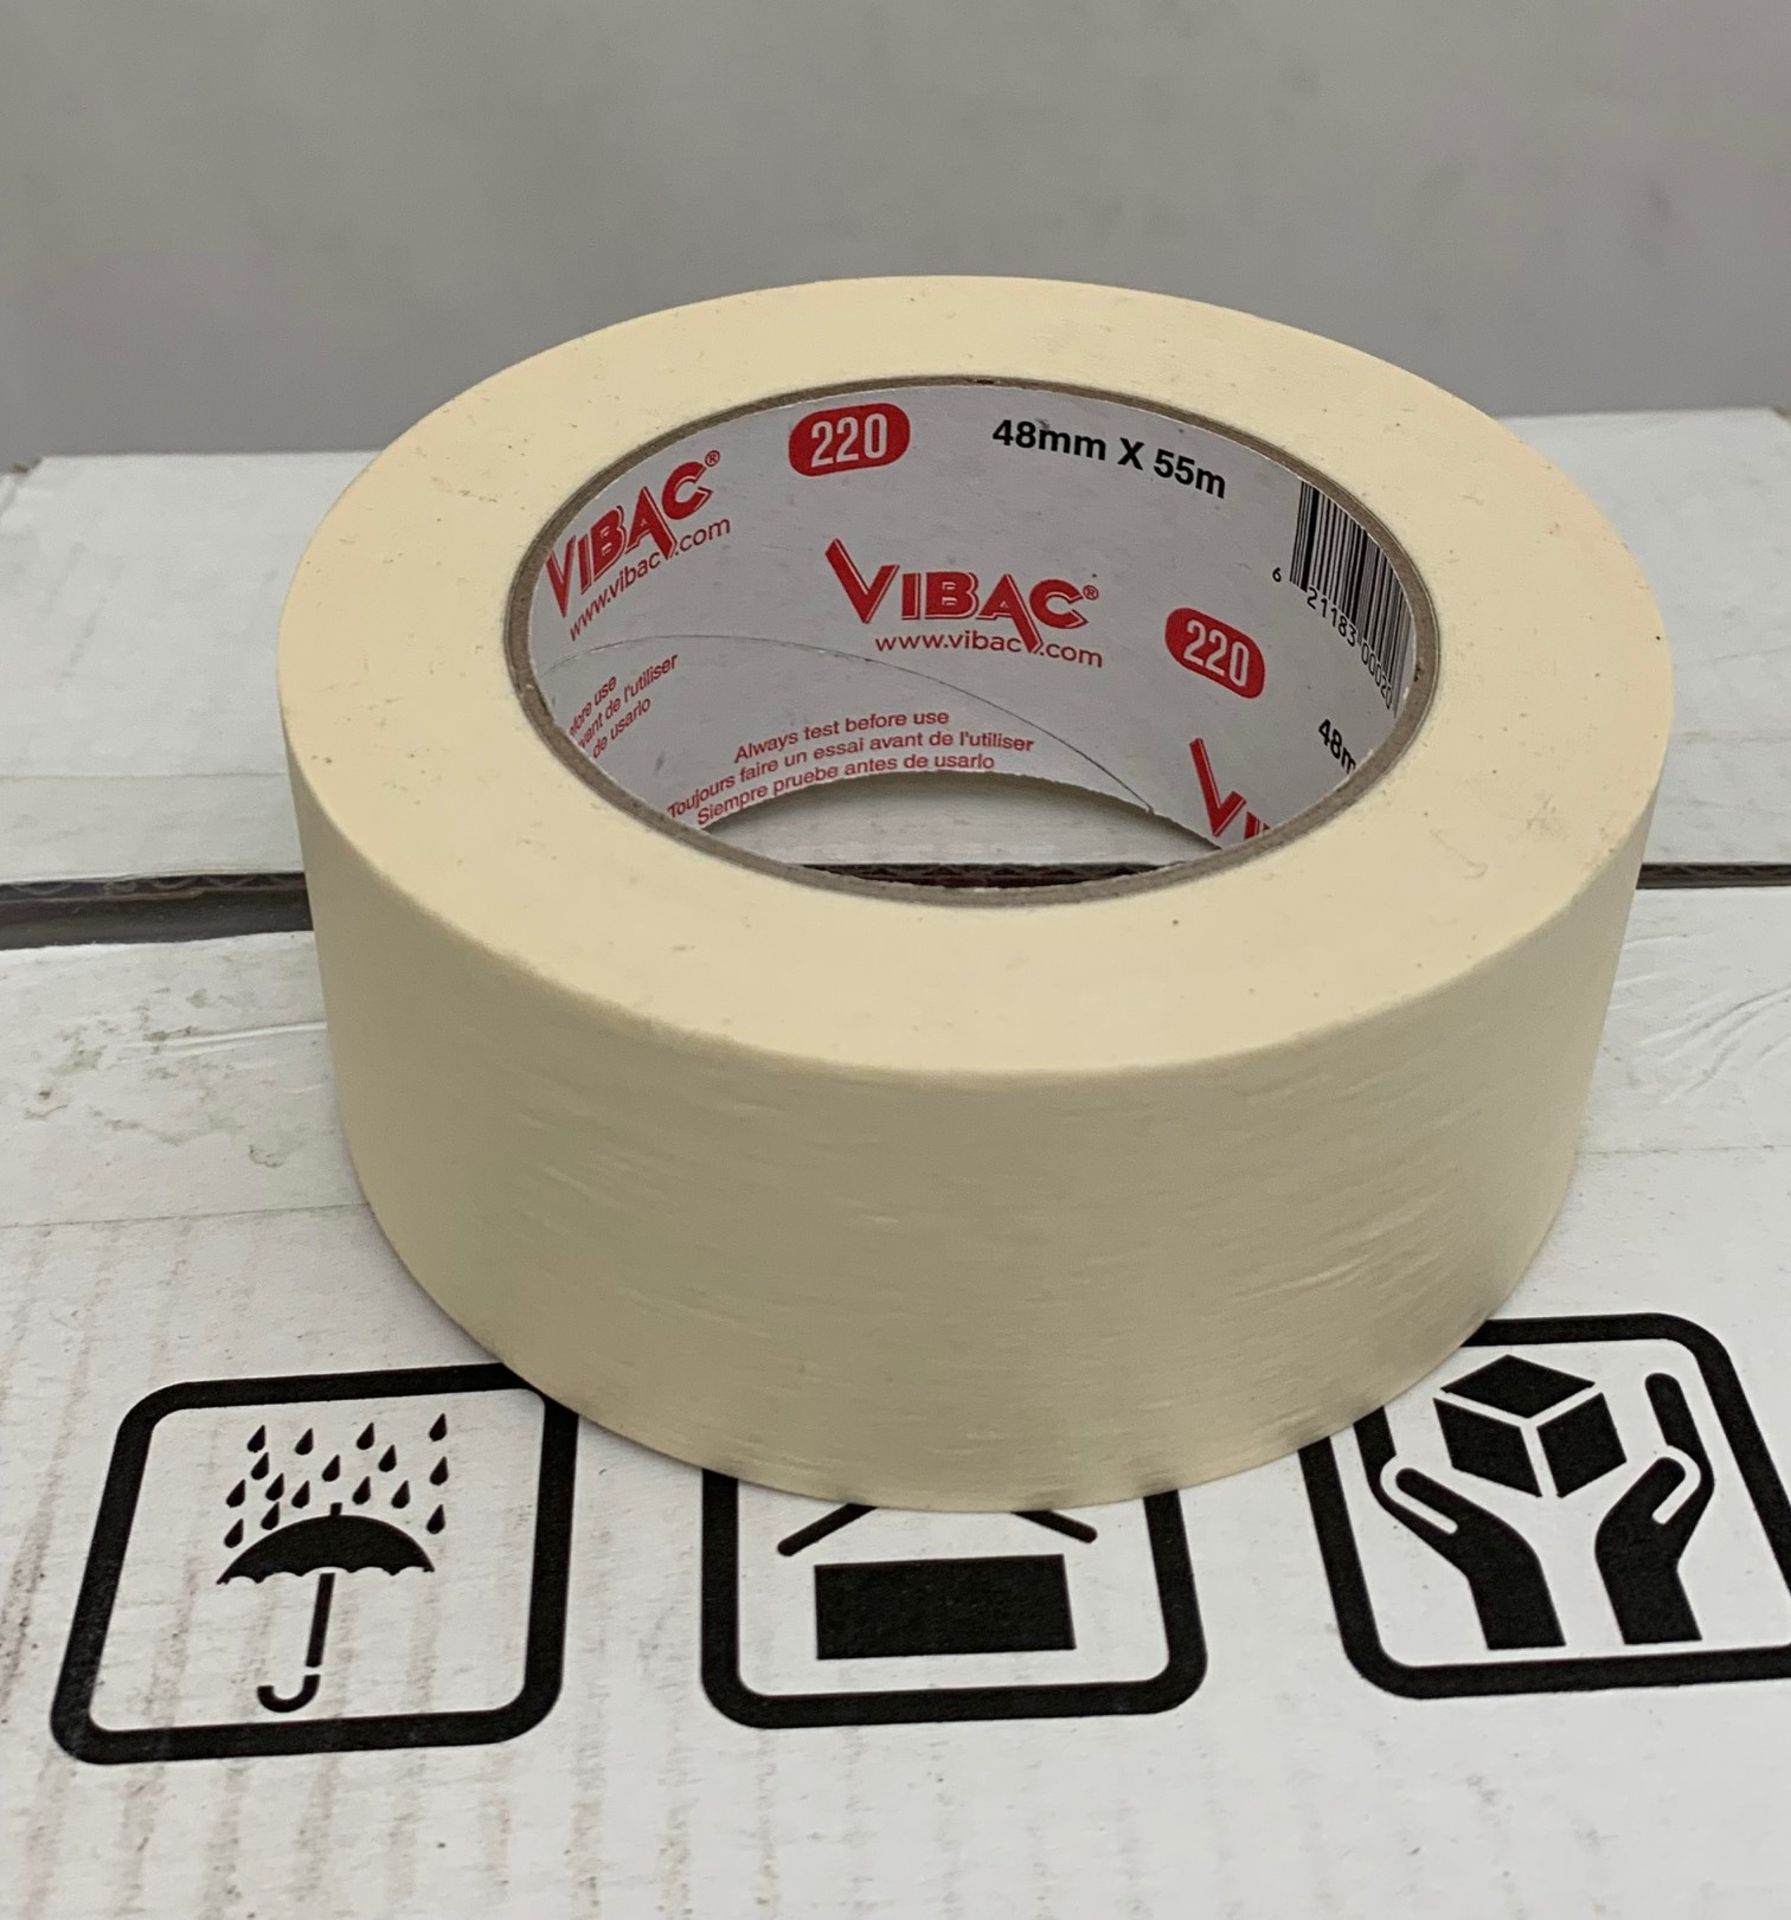 Vibac 220 Masking Tape: 10.5 Boxes - 24 Rolls/Box (South Fulton, TN) - Image 3 of 4